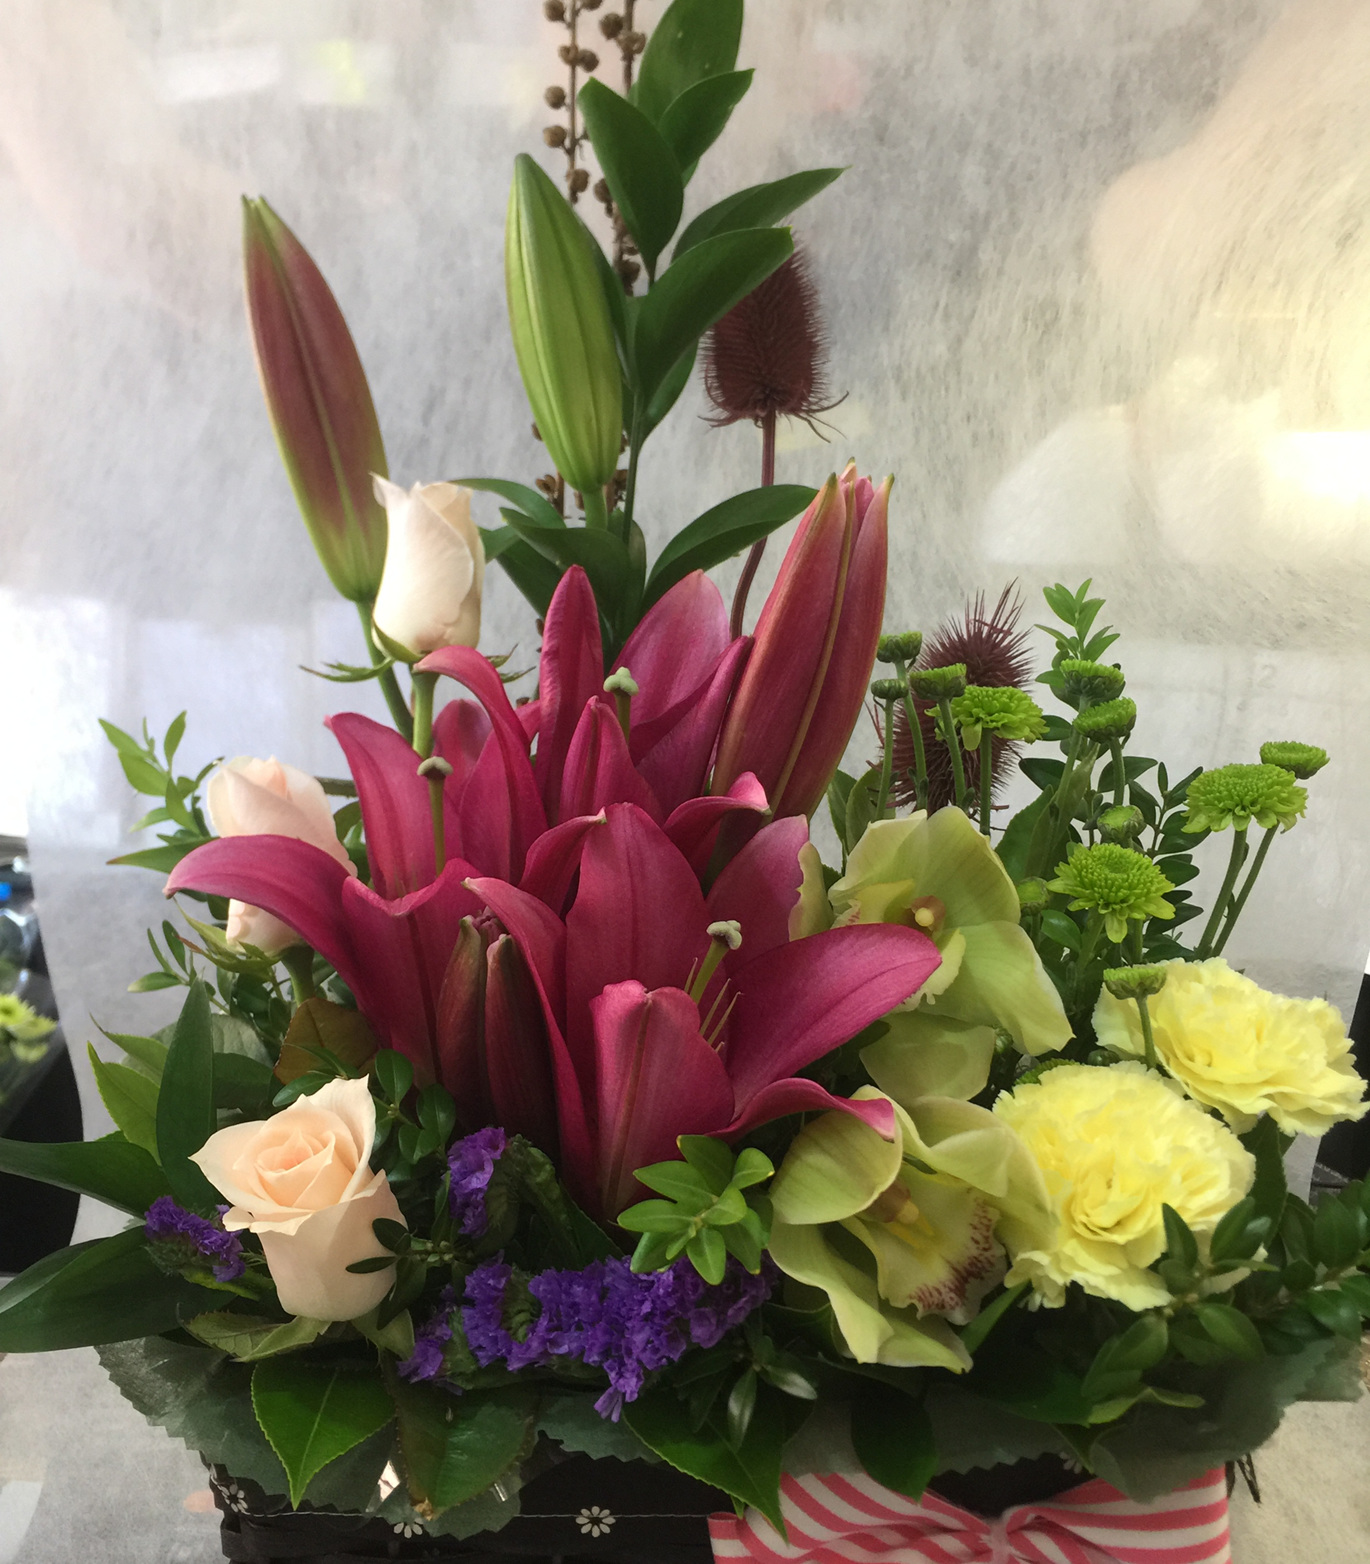 quality flower arrangement in basket.